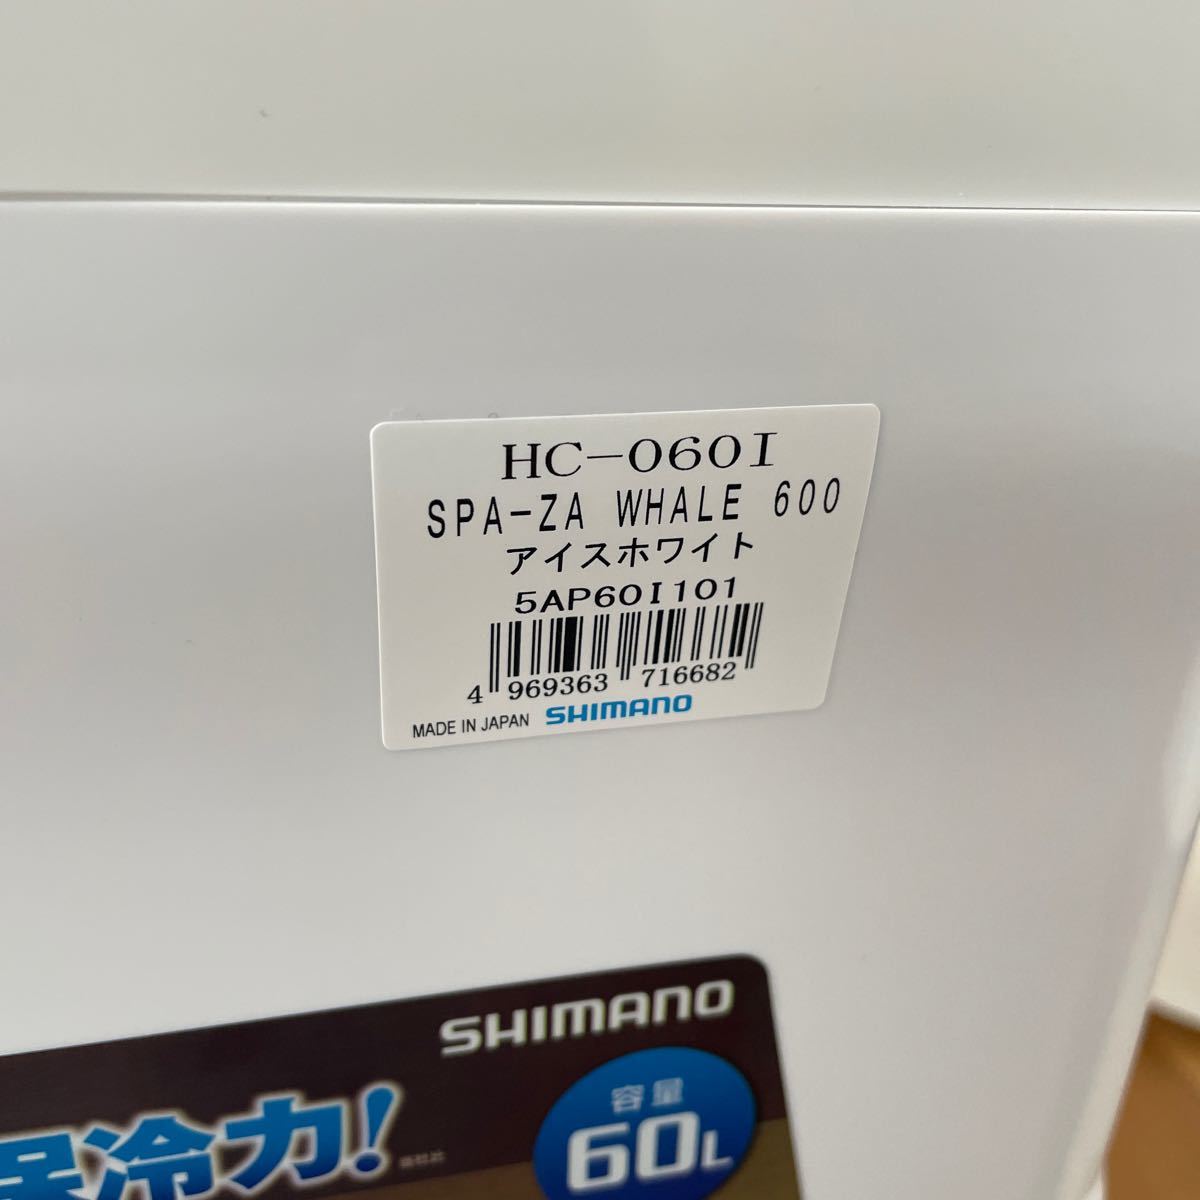  free shipping! new goods unused! Shimano (Shimano) I HC-060[ spec - The ho e-ru limited 600] ice white SPA-ZA WHALE LIMITED 600